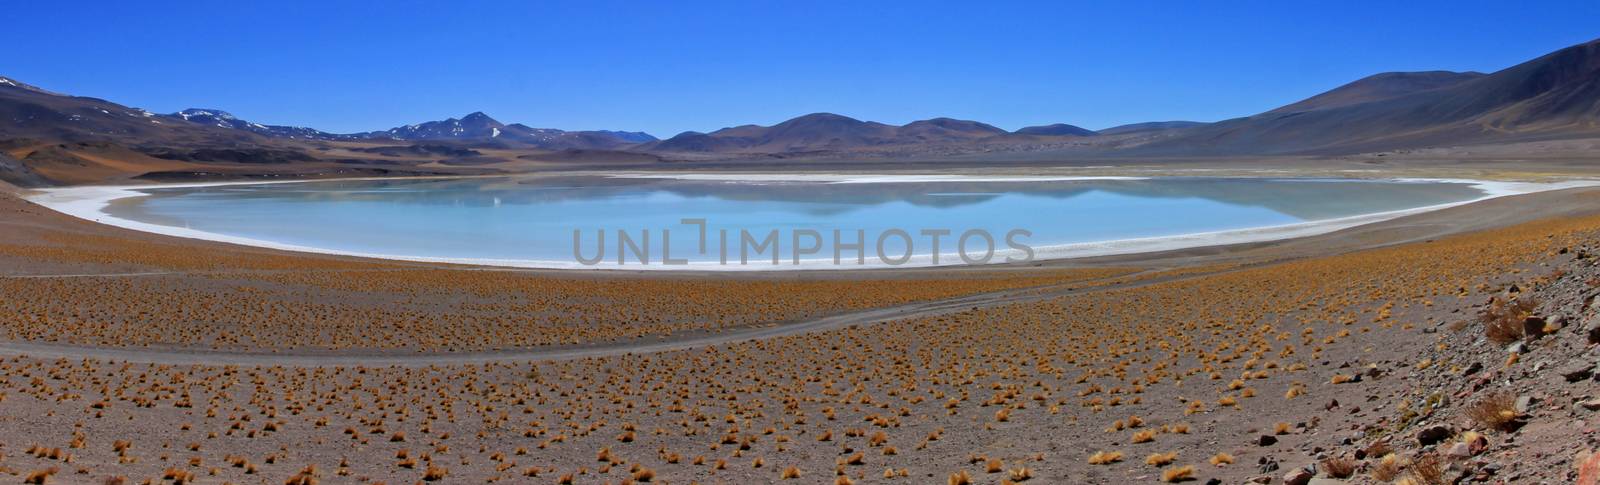 Salar Tuyajto, Atacama desert, Chile by cicloco